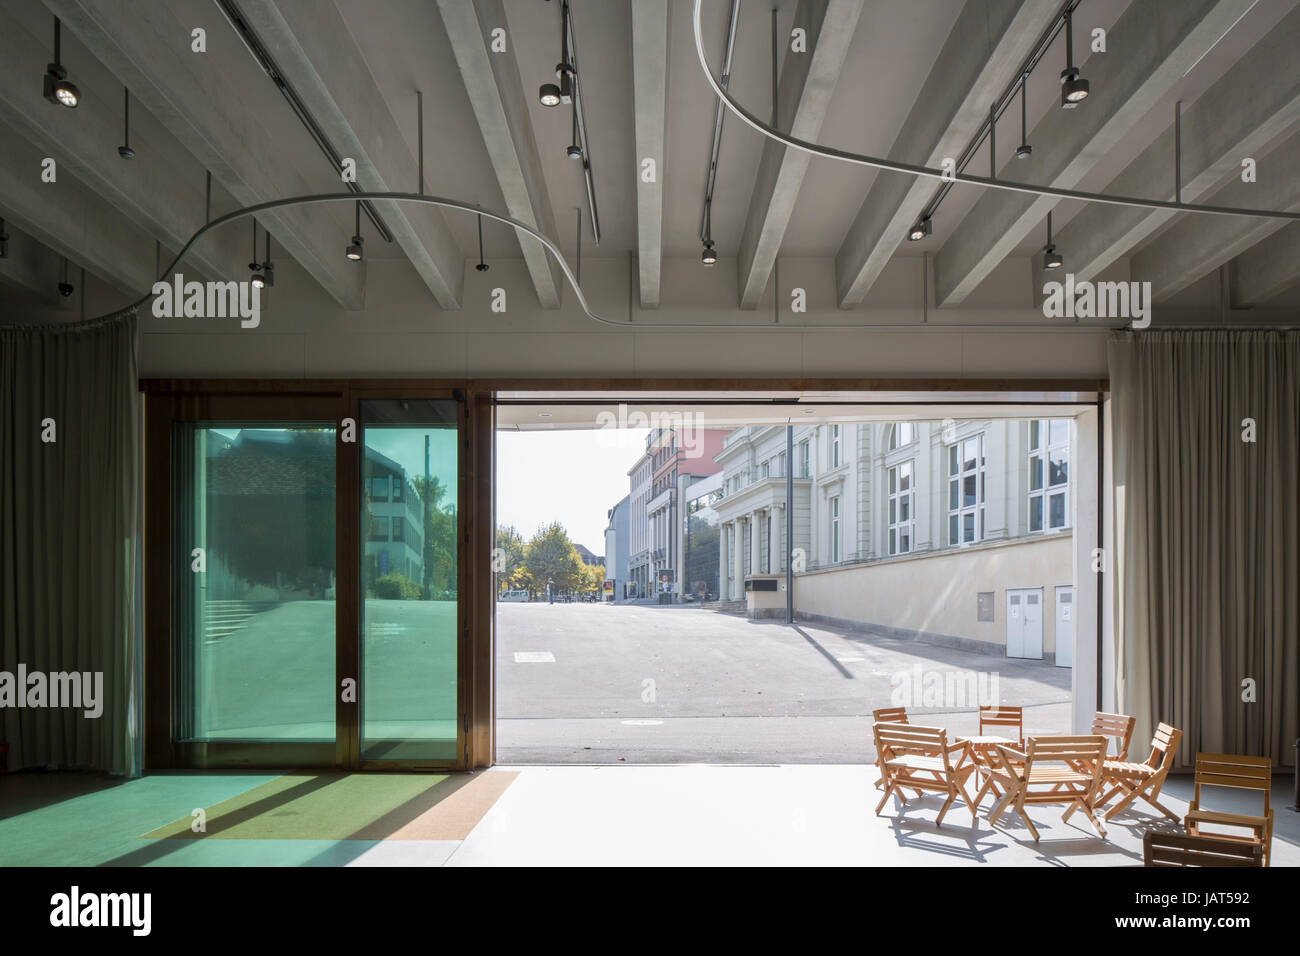 View from ground floor extension interior towards publc square. Aarau City Museum, Aarau, Switzerland. Architect: Diener & Diener, 2015. Stock Photo